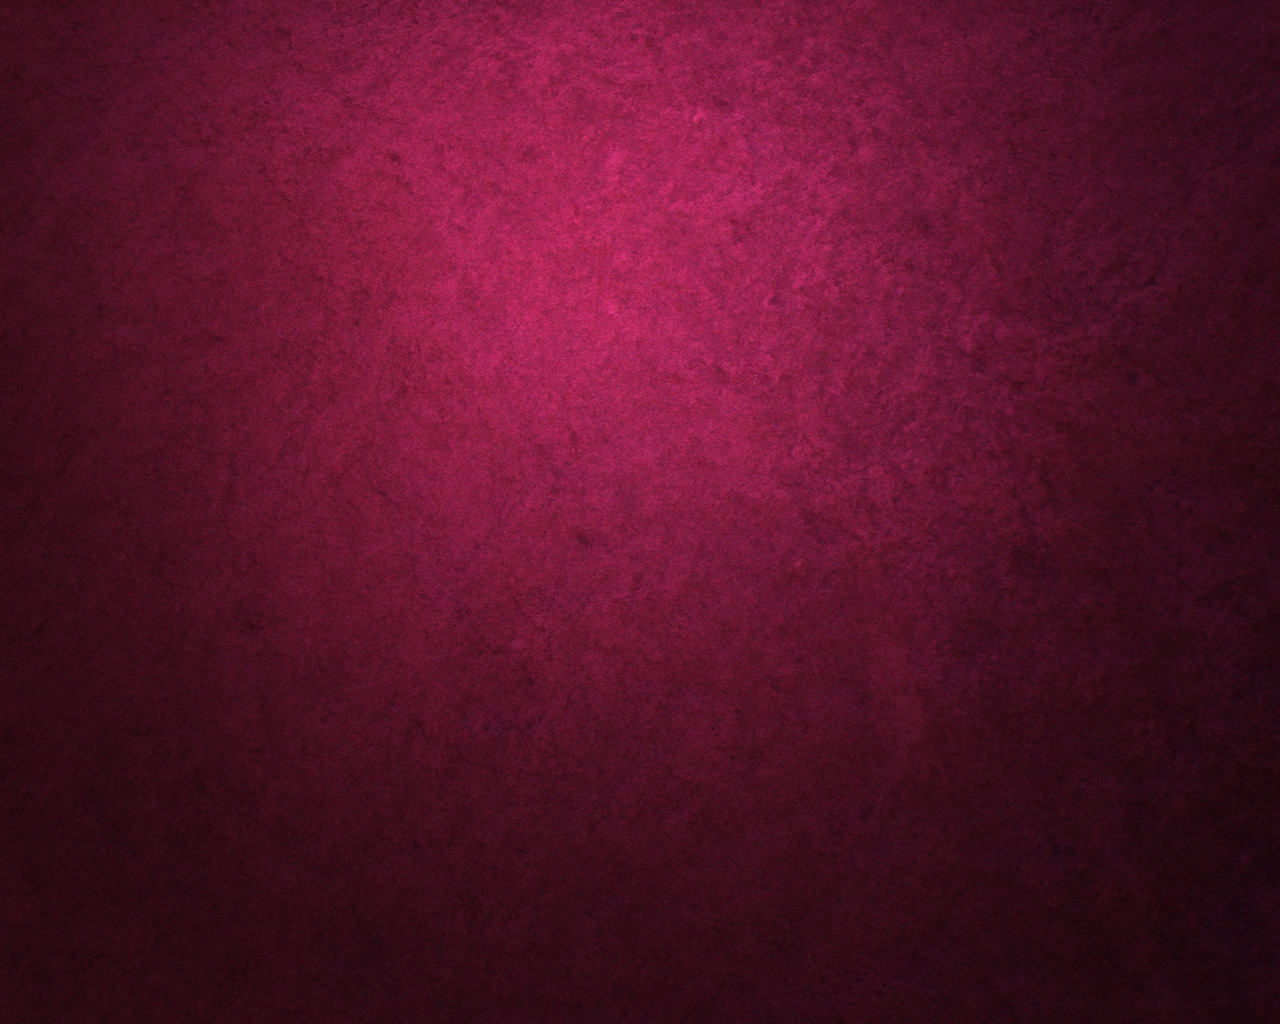 PurpleRough for 1280 x 1024 resolution